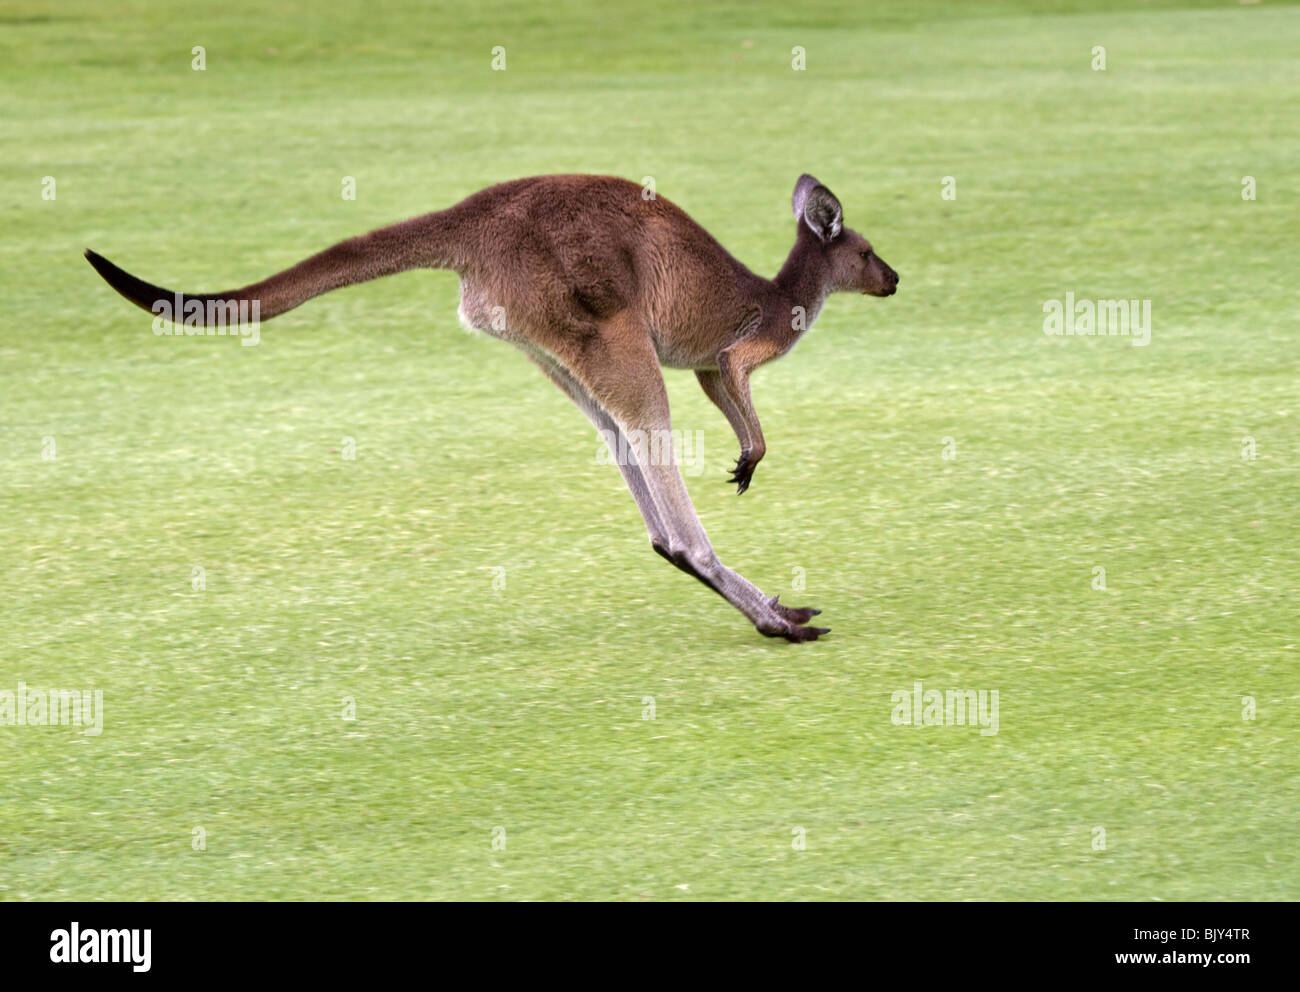 Grigio occidentale Canguro, Macropus fuliginosus melanops, saltare attraverso un campo erboso Foto Stock